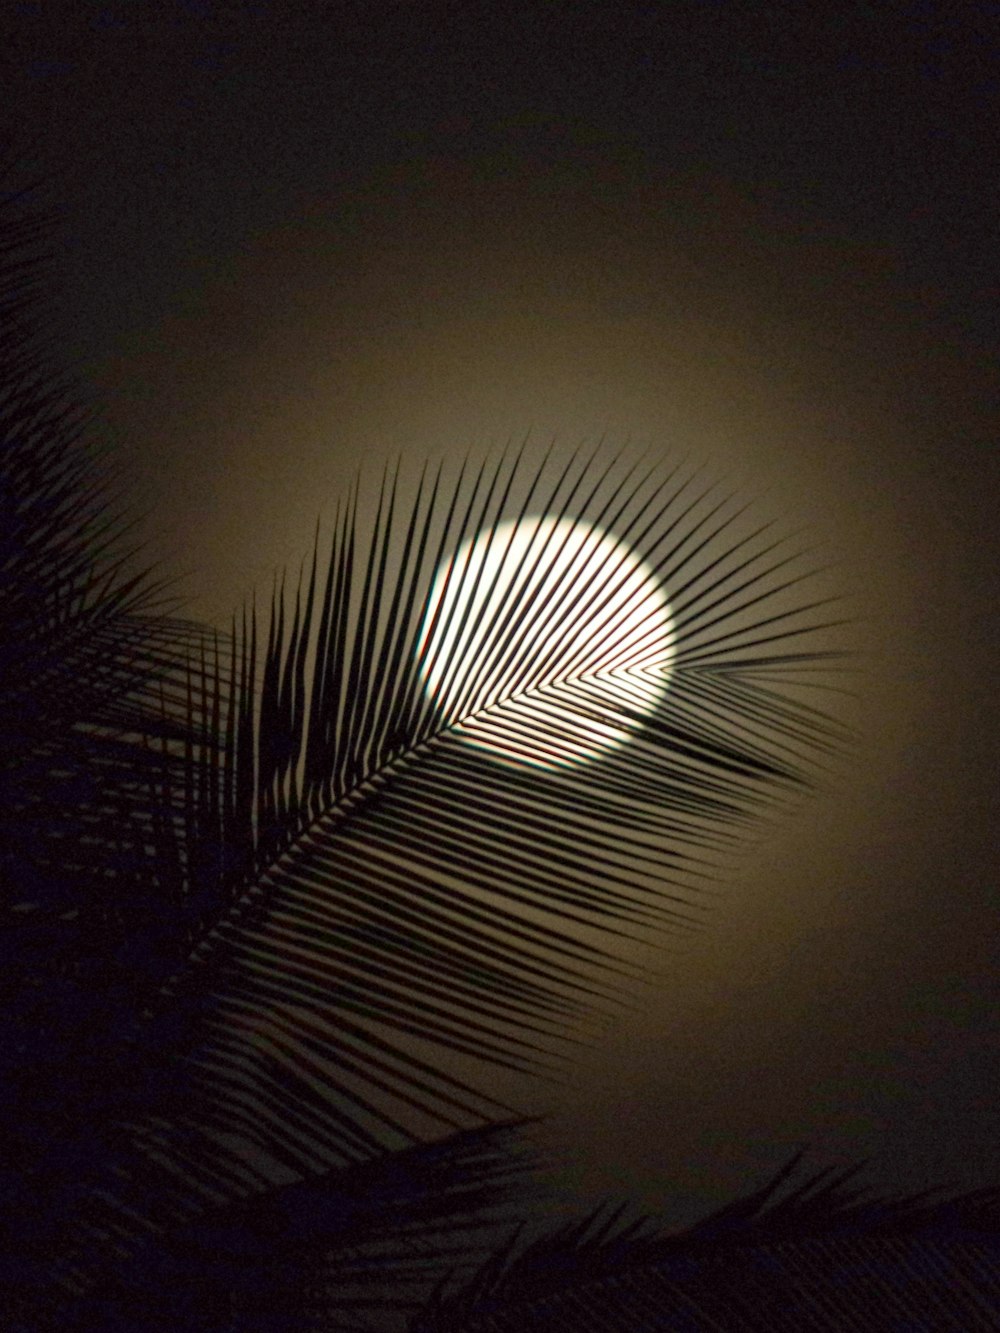 El sol brilla a través de una hoja de palma